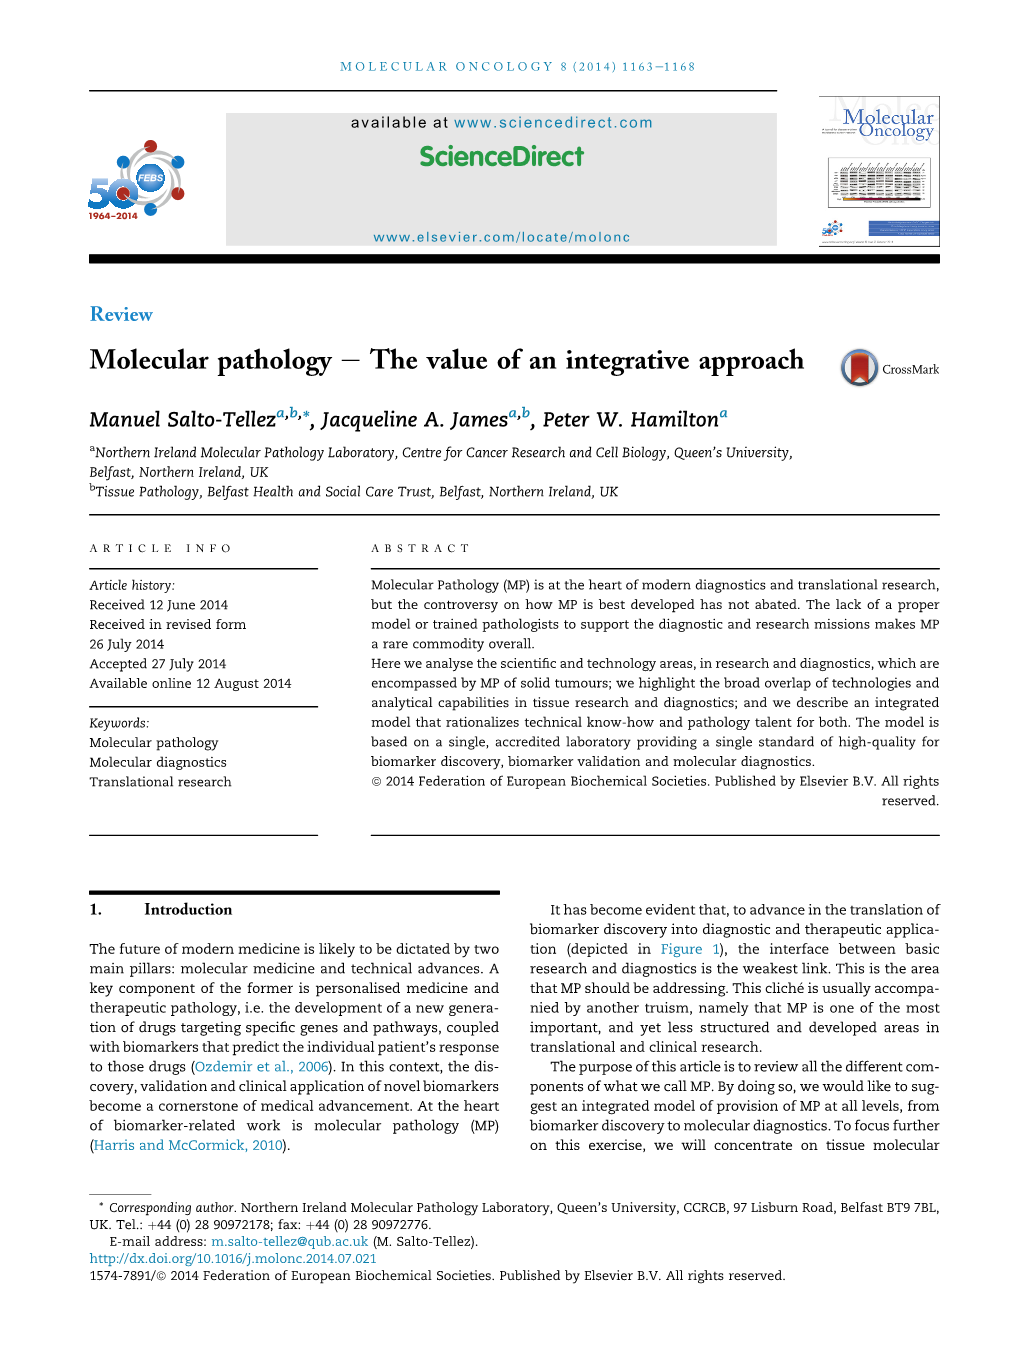 Molecular Pathology E the Value of an Integrative Approach